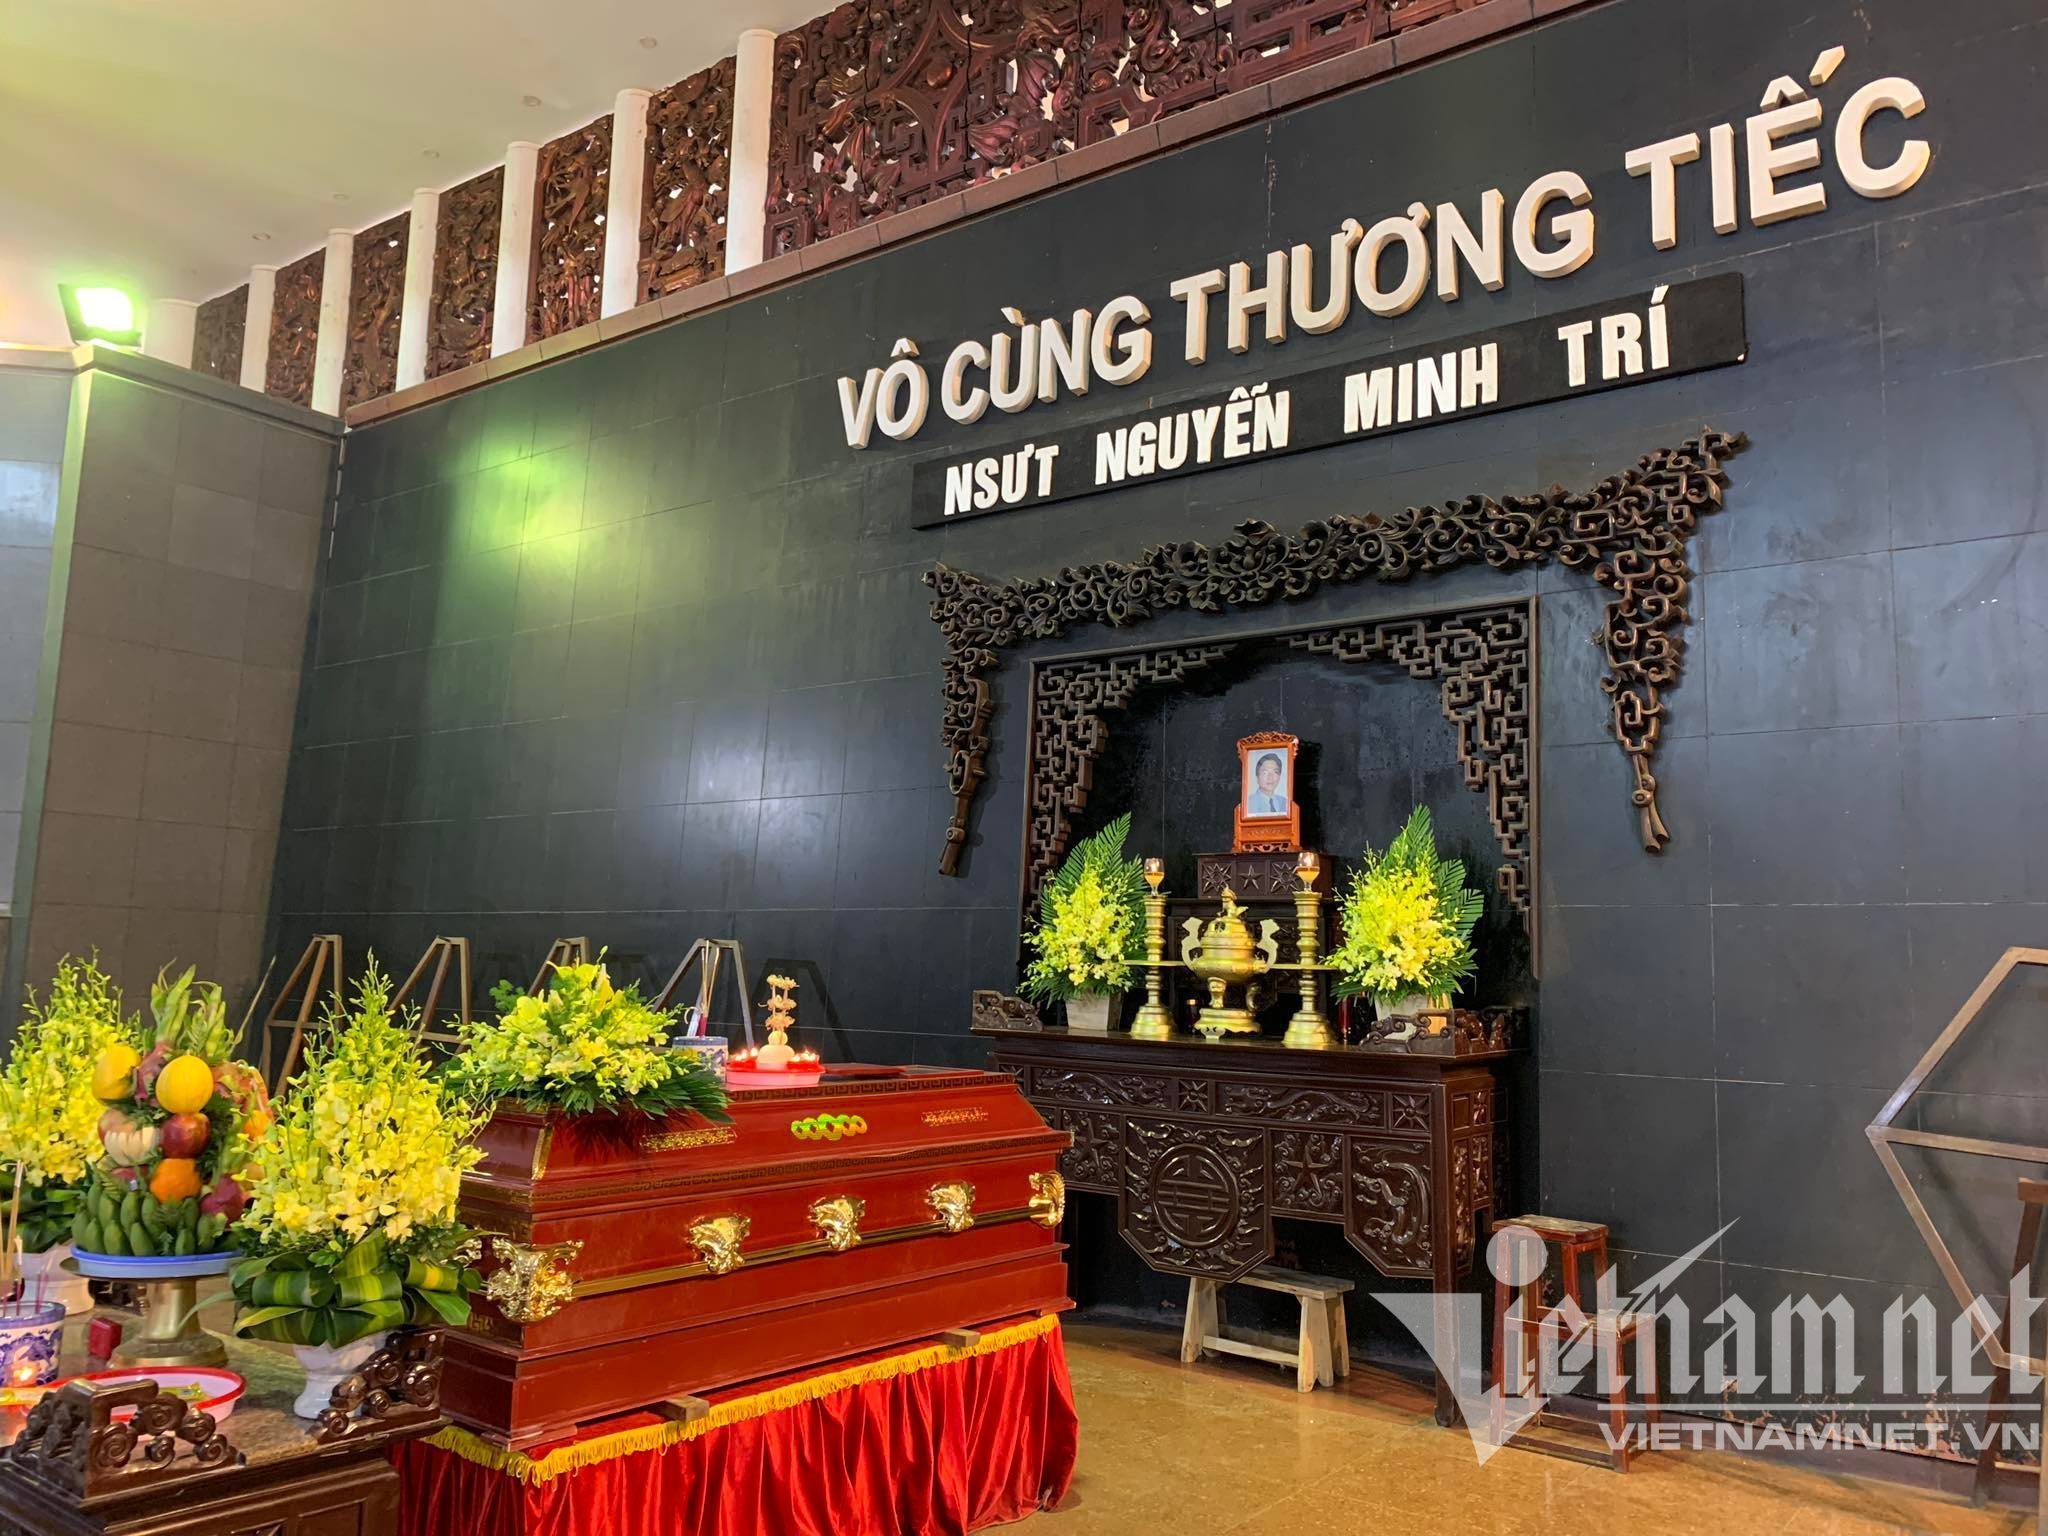 Funeral of 'legendary reading voice' VTV - Meritorious Artist Minh Tri